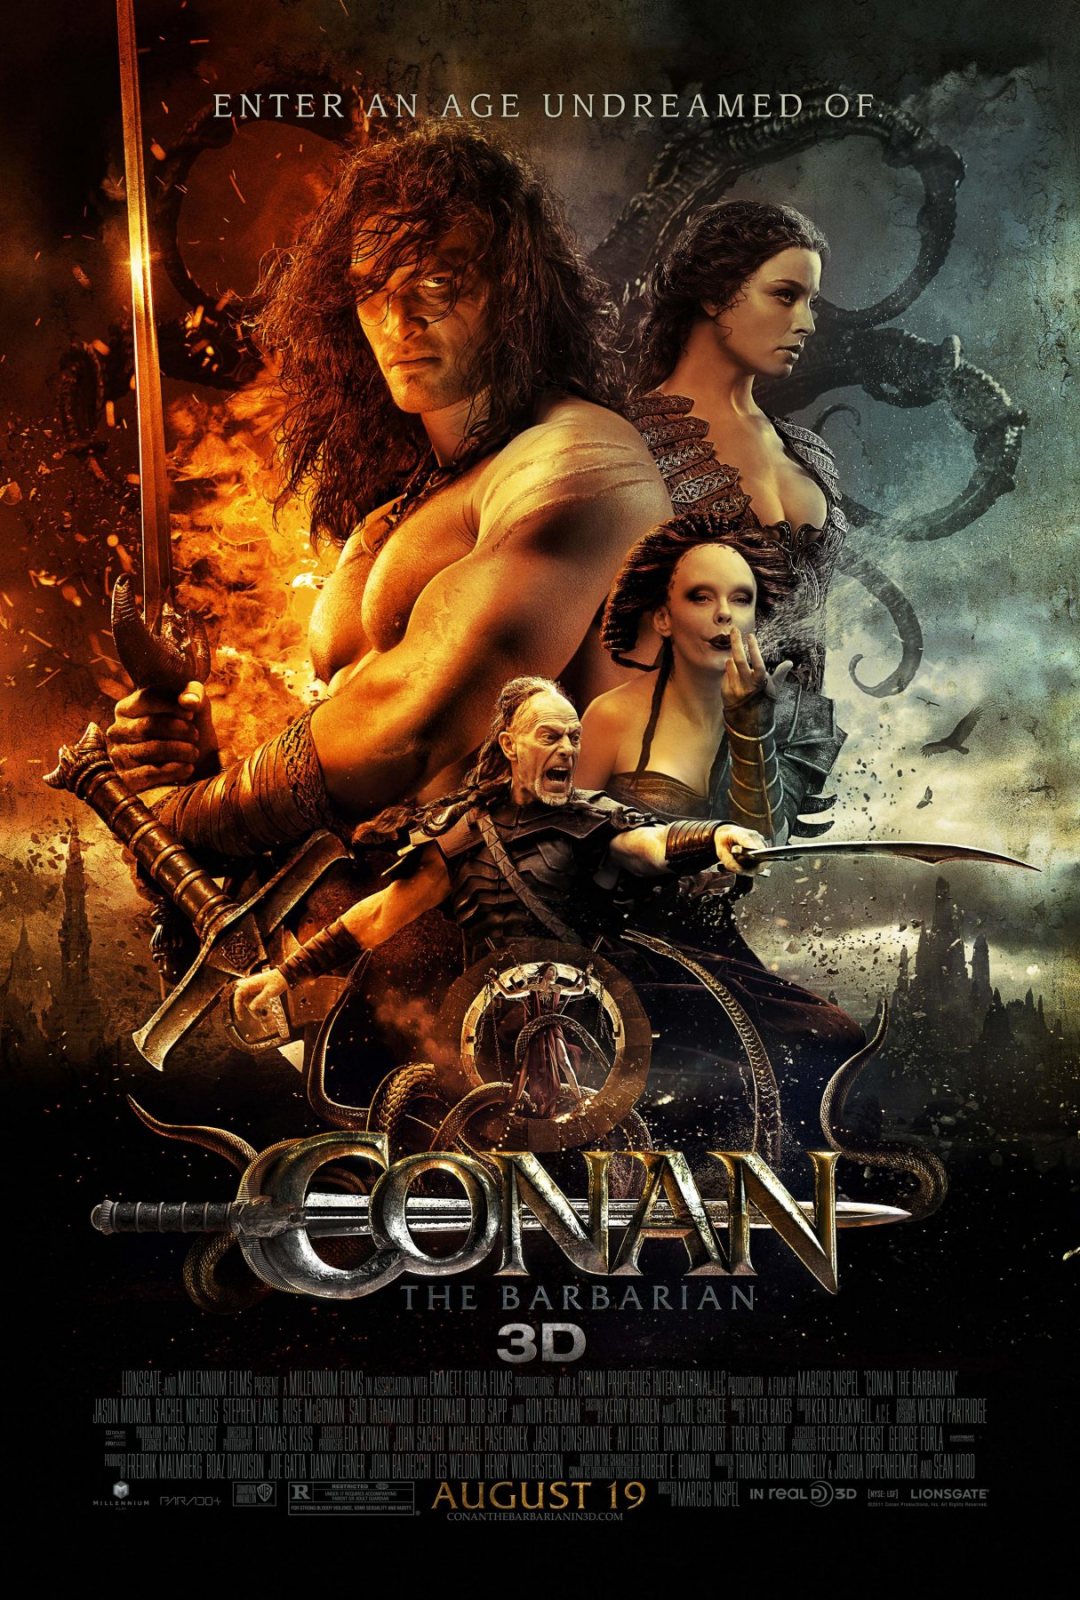 kinopoisk.ru-Conan-the-Barbarian-1626487--o--.jpg